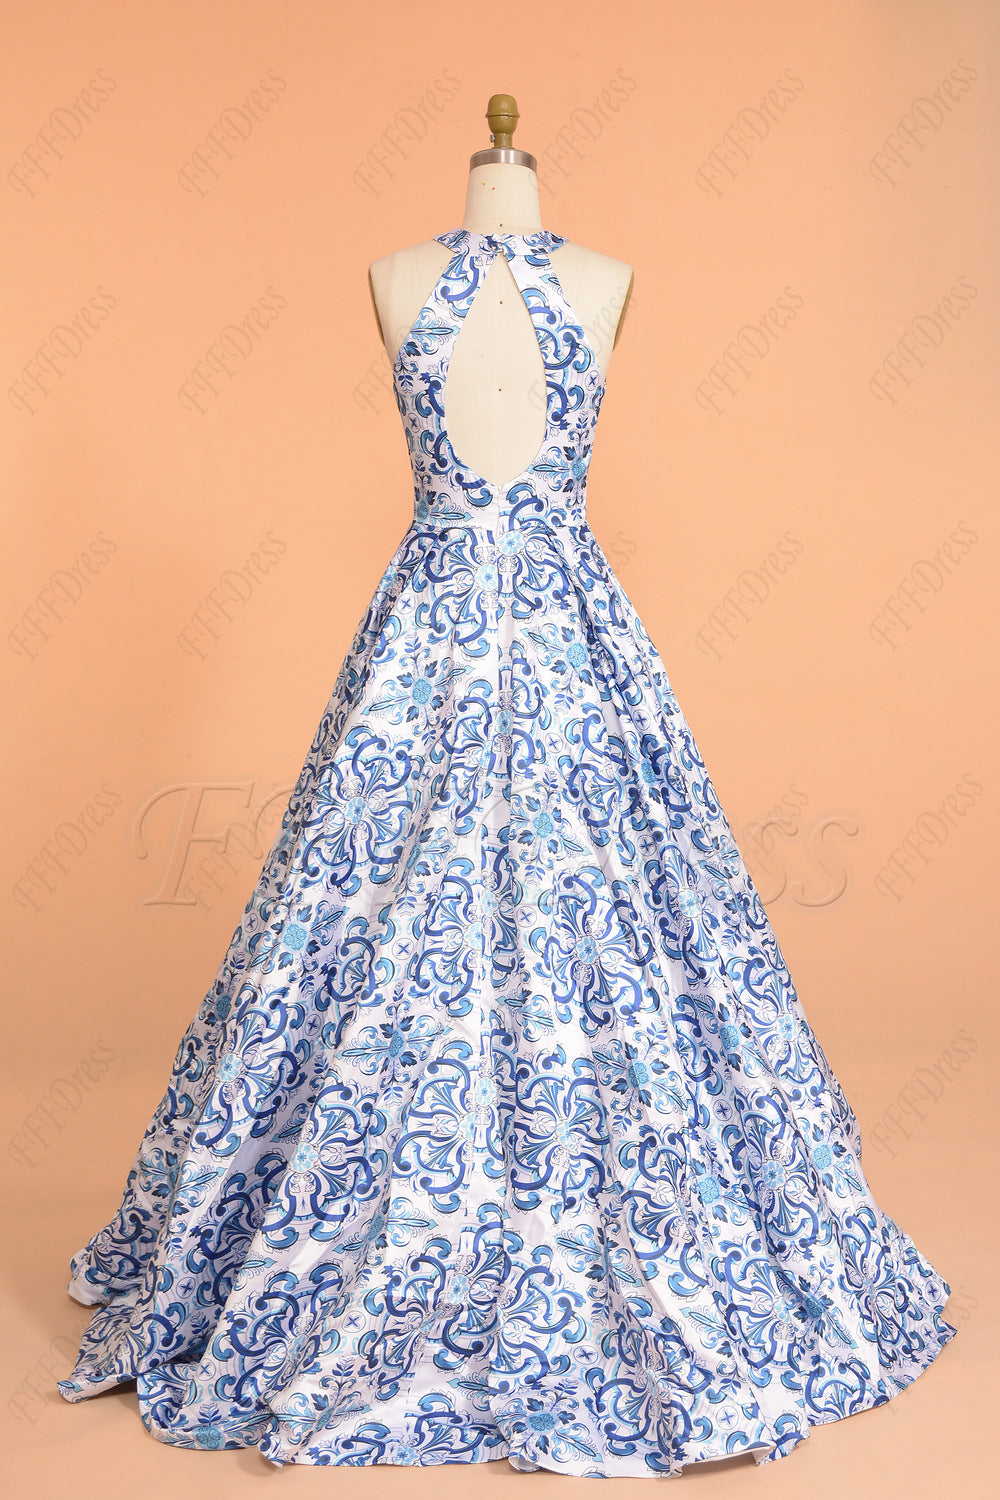 Halter print floral ball gorn prom dresses long